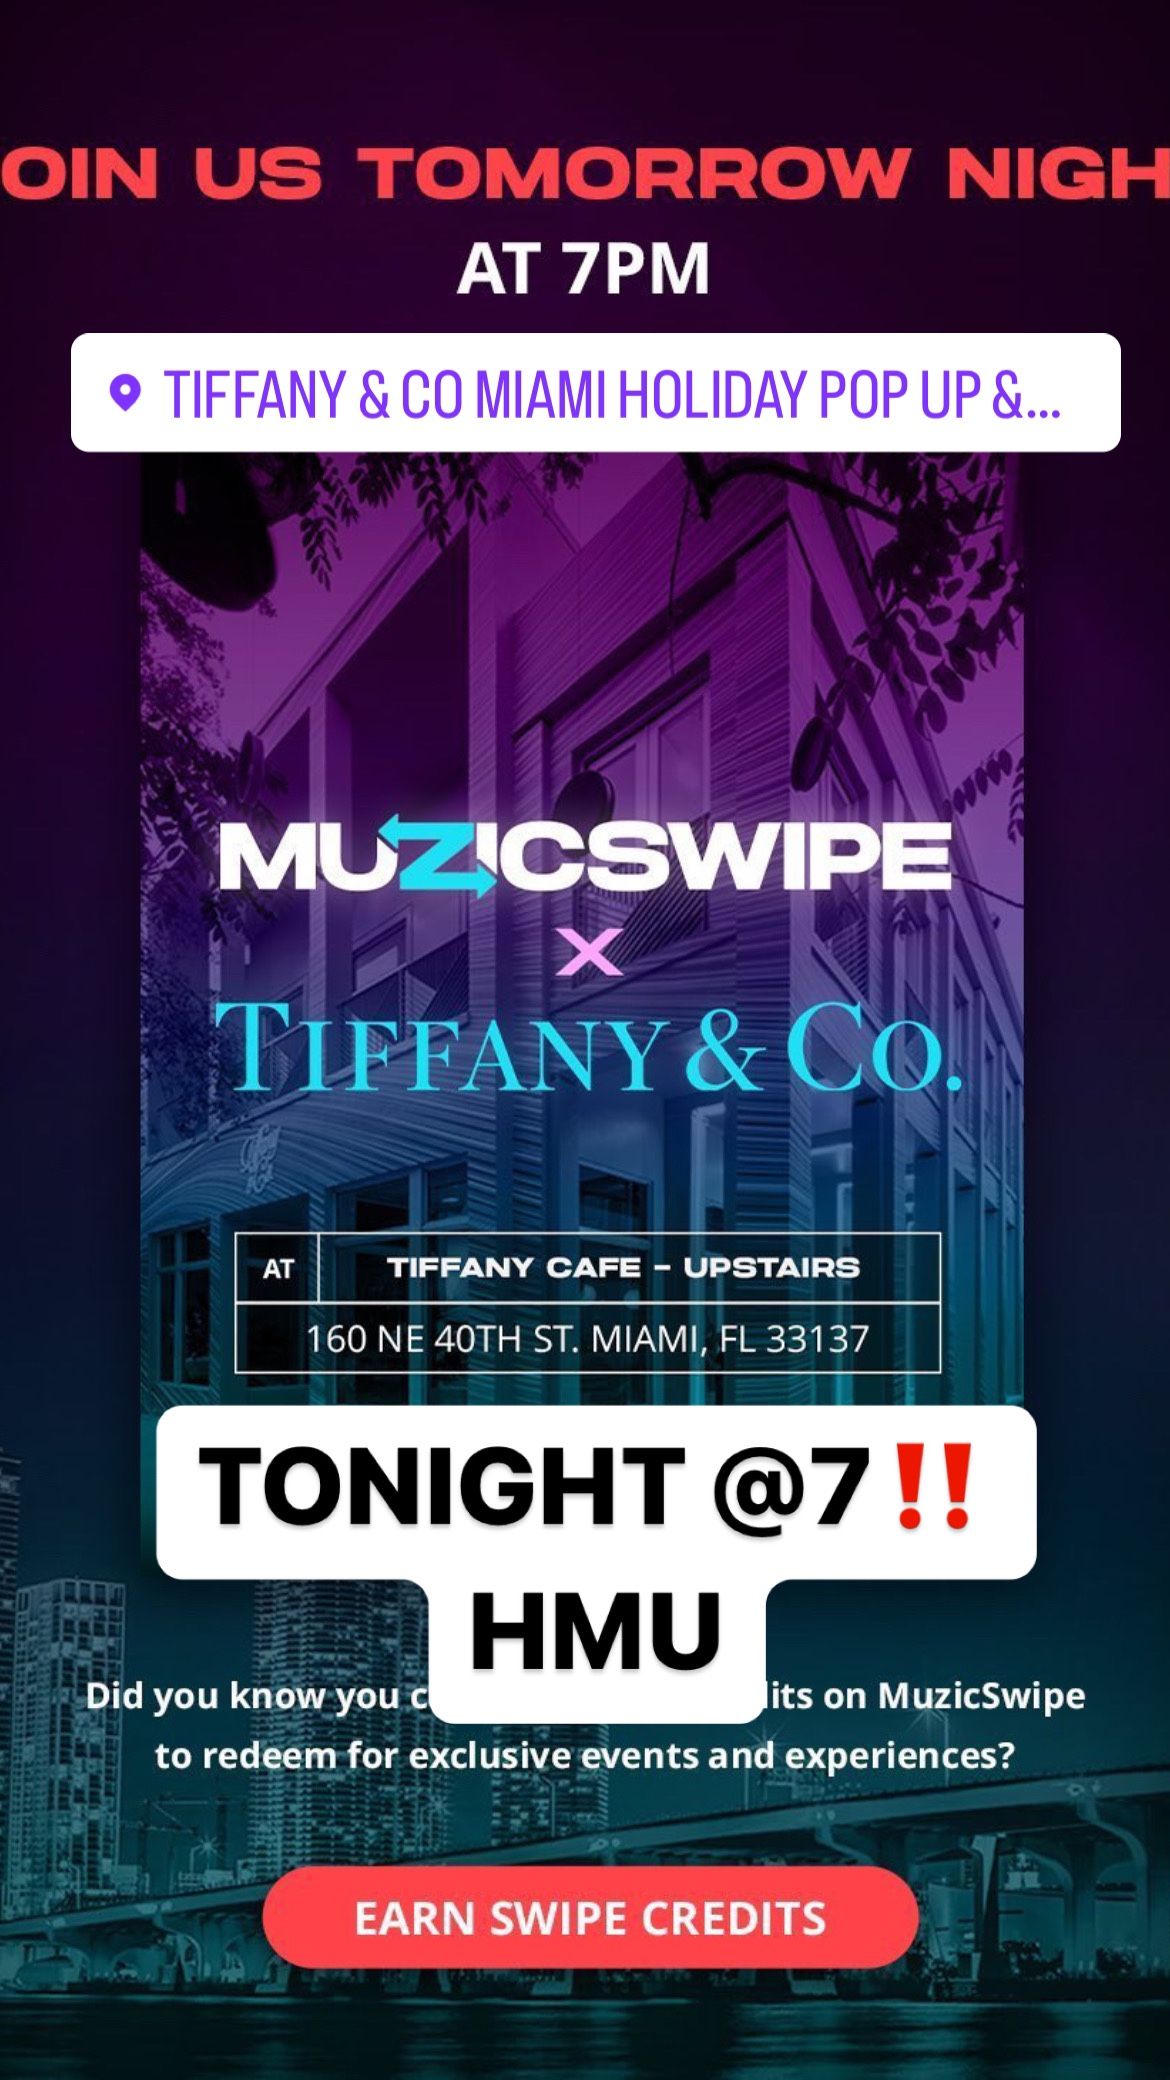 Music swipe X Tiffany Co.